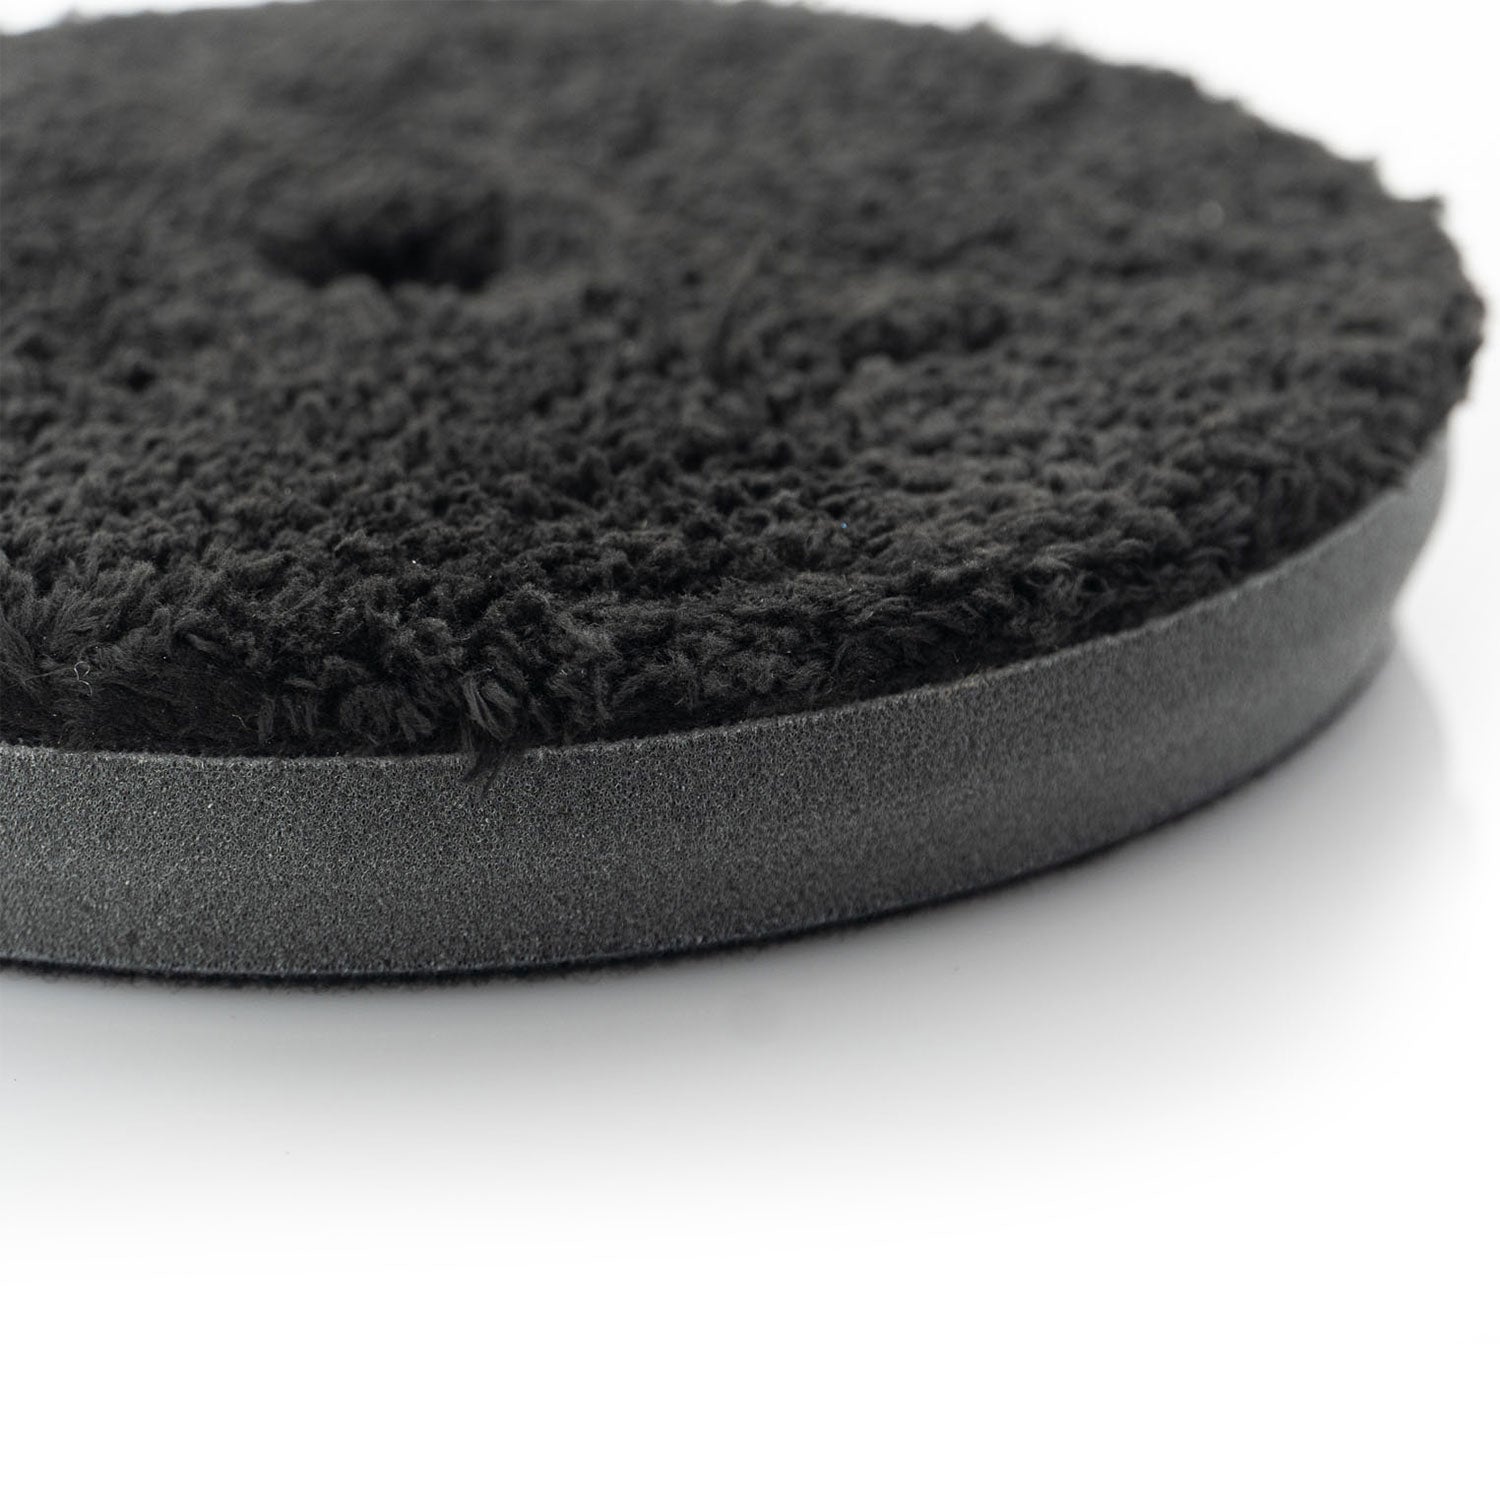 p10-black-foam-and-microfiber-polishing-pad-close-up